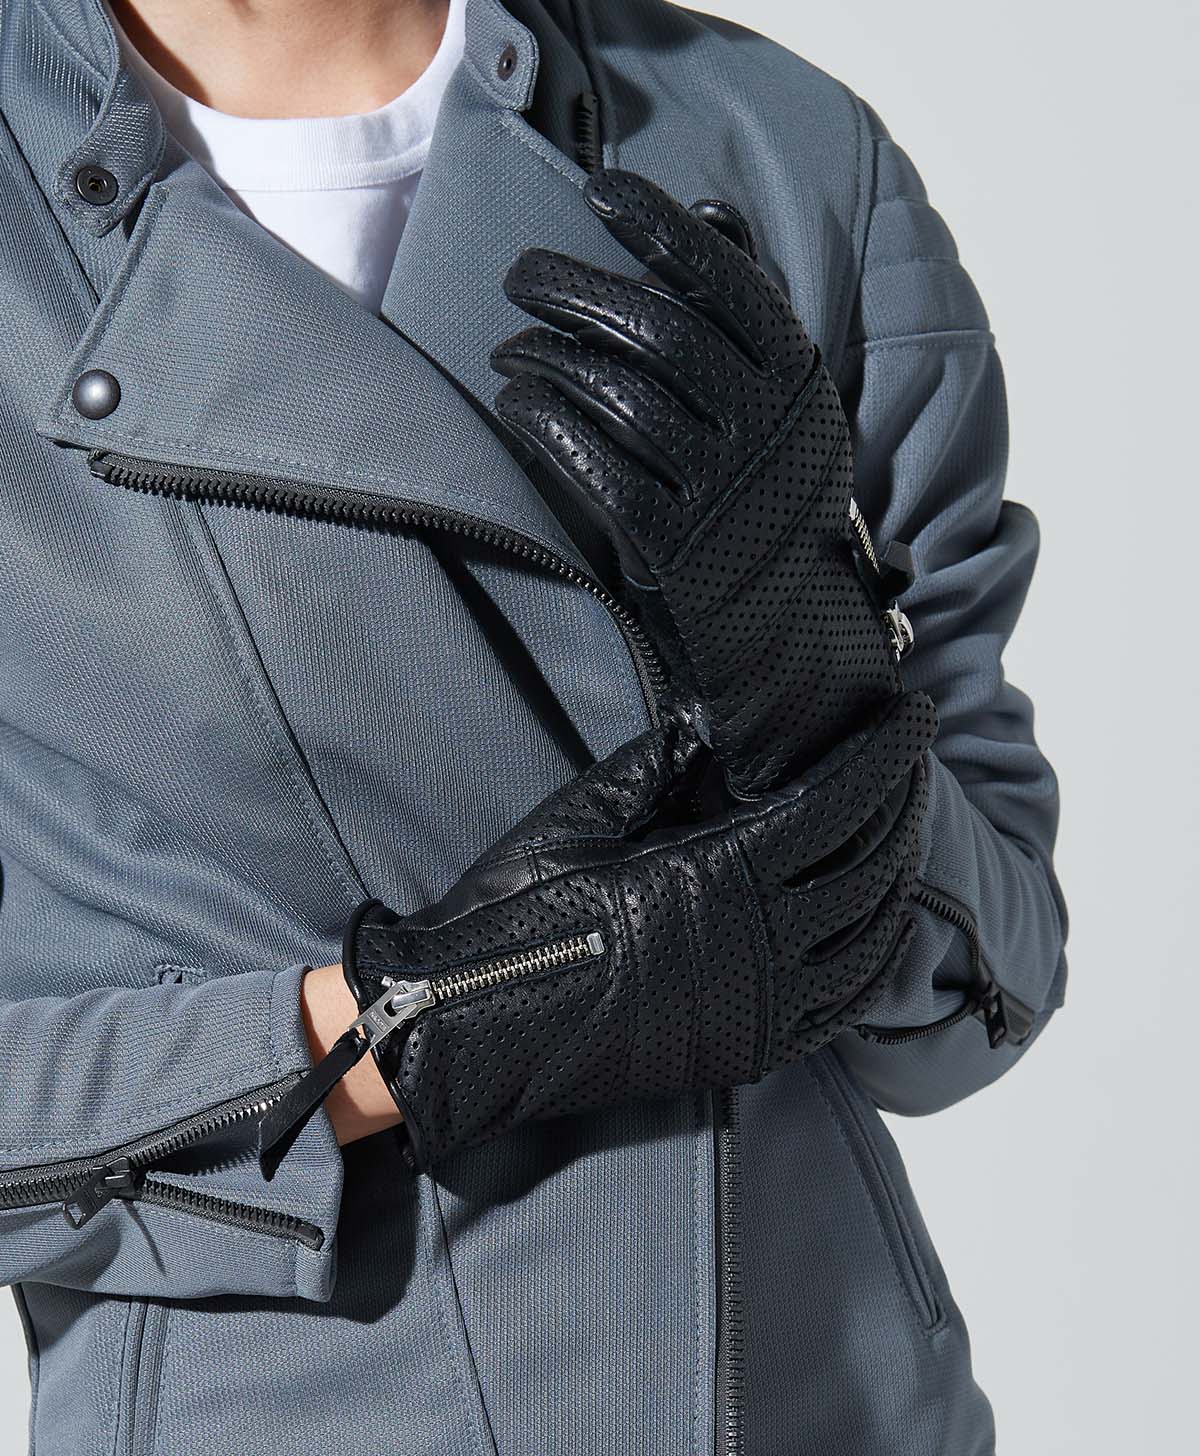 Rox Glove -Pl / Black (Women's)